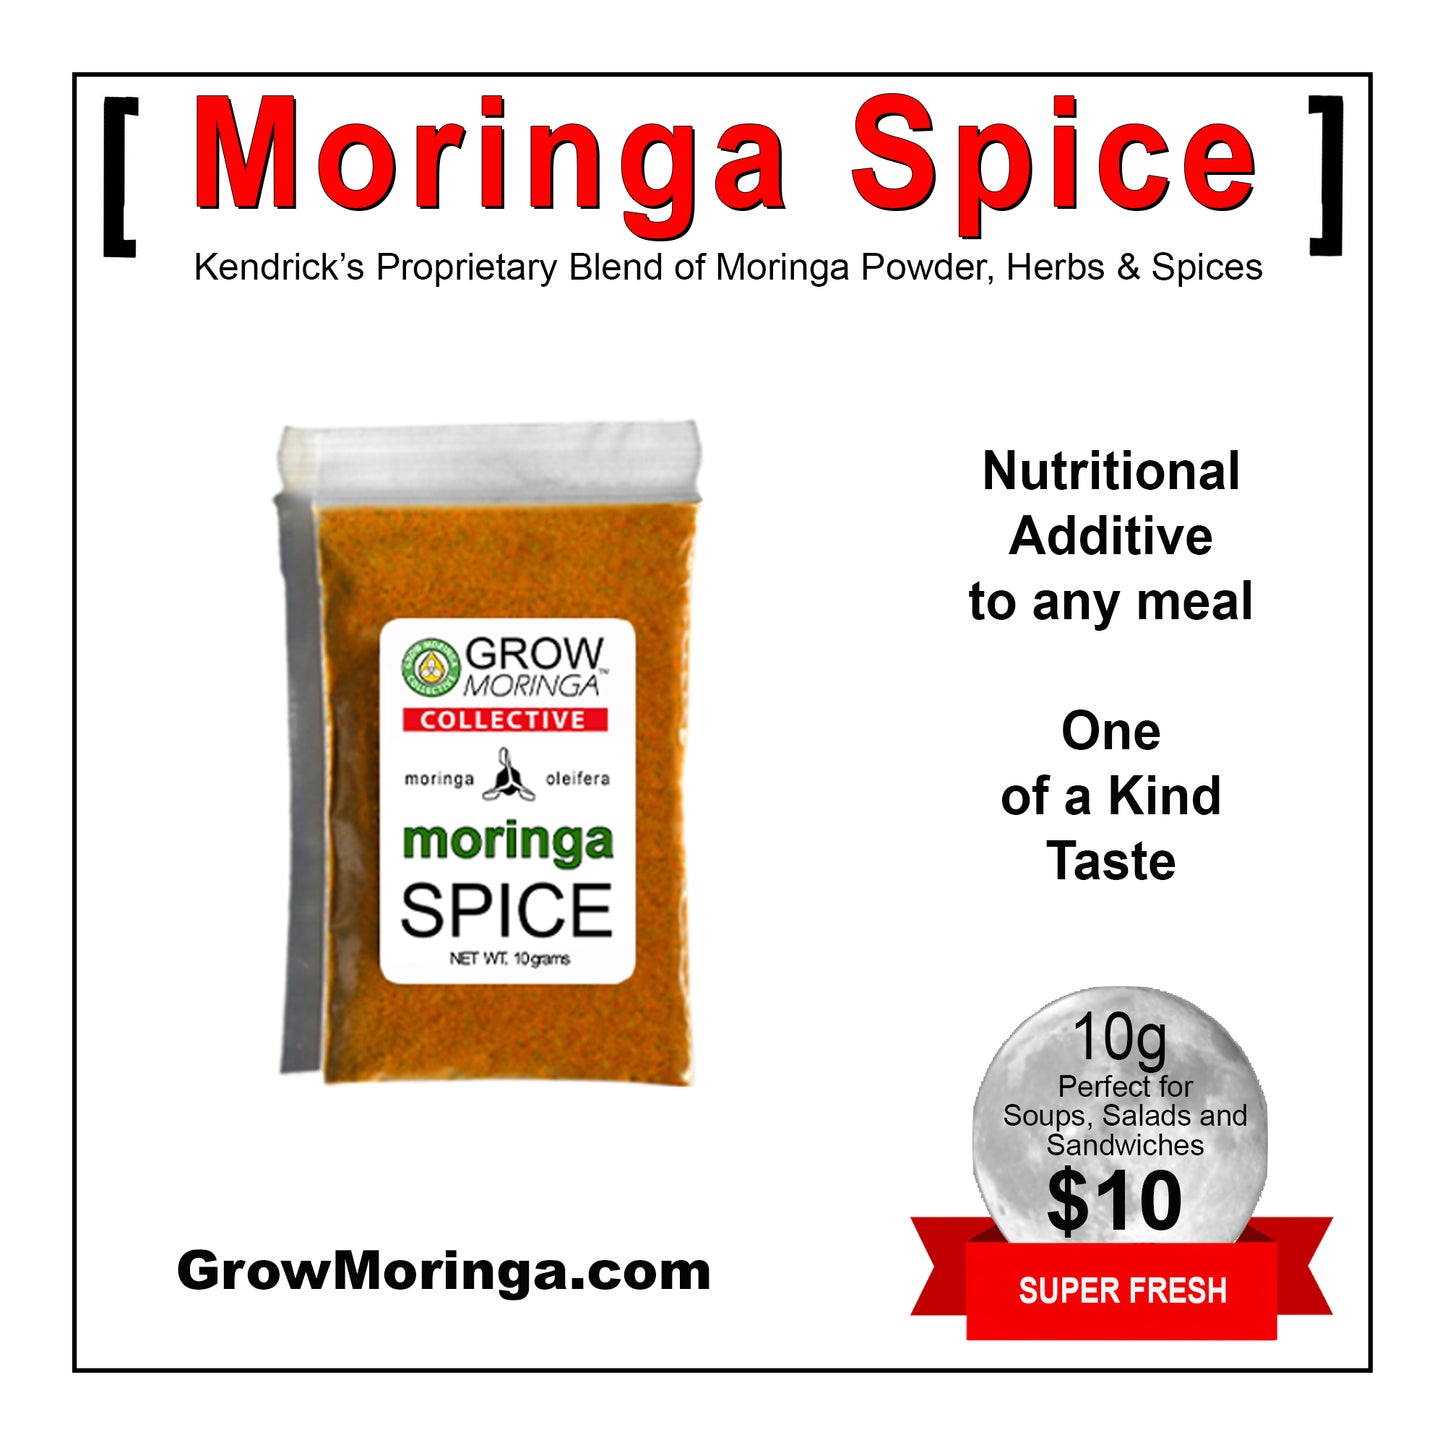 Moringa Spice